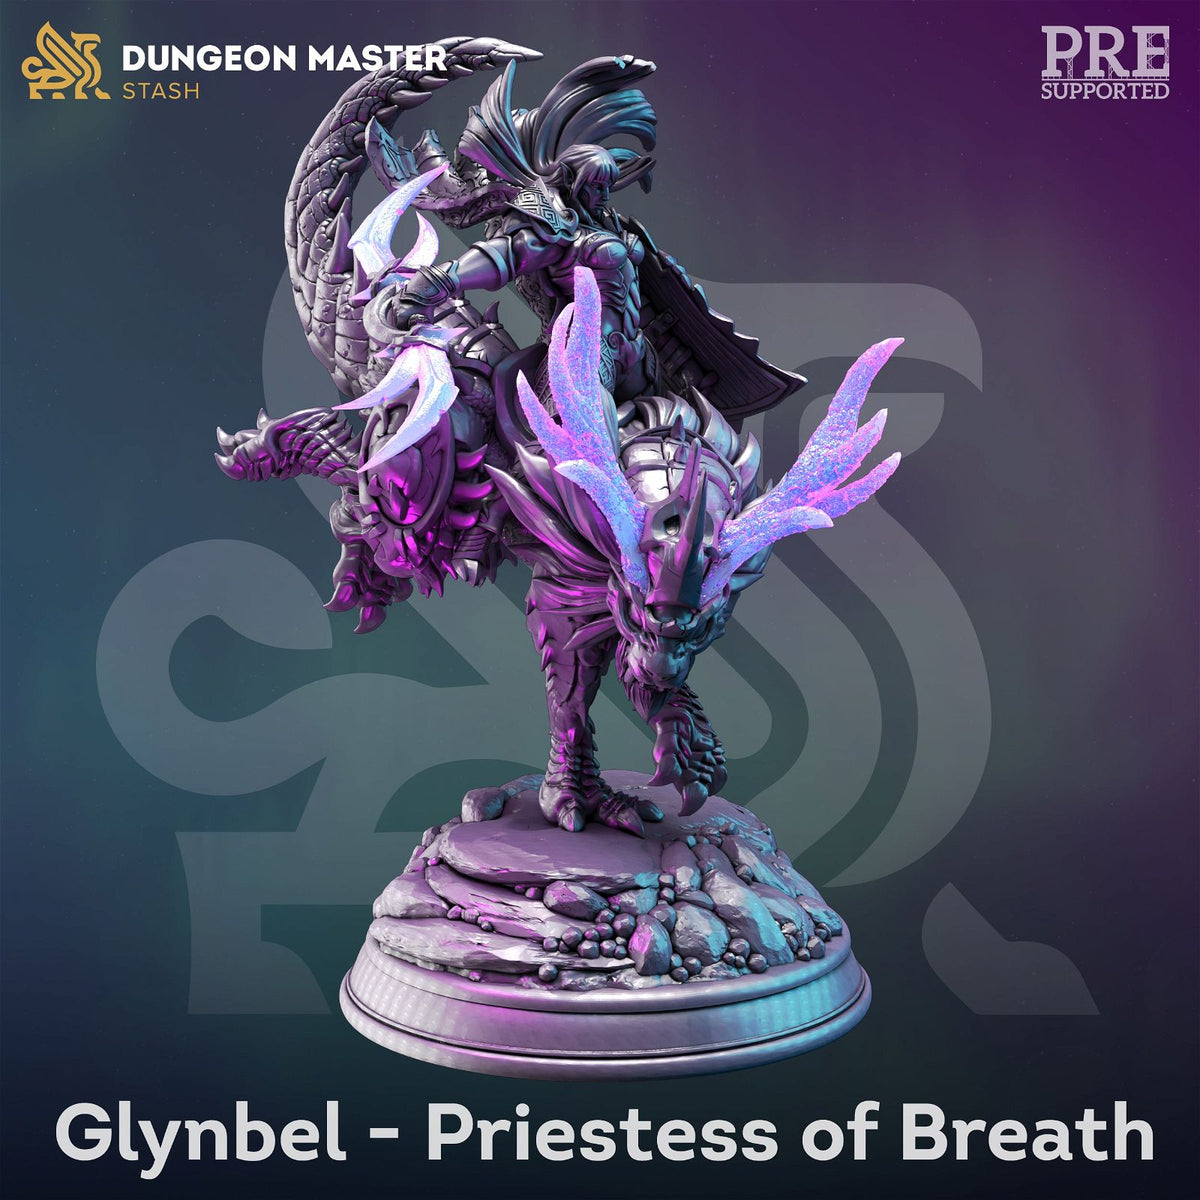 Glynbel The Priestess of Breath - The Printable Dragon